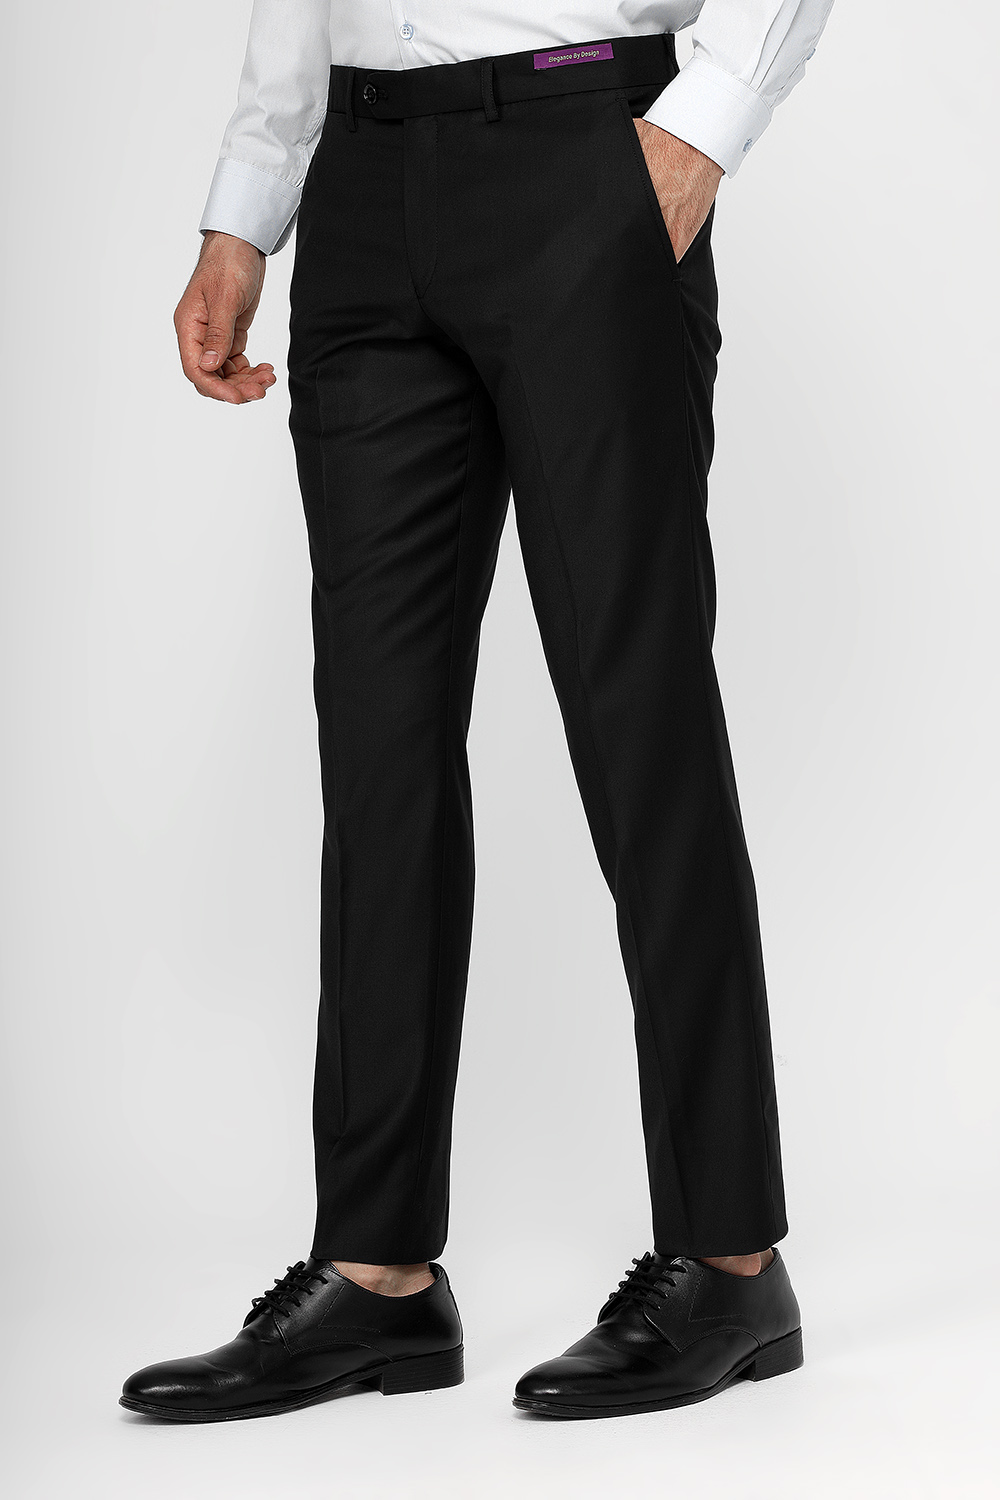 Plaid&Plain Men's Stretch Skinny Fit Casual Business Pants Ankle Dress Pants